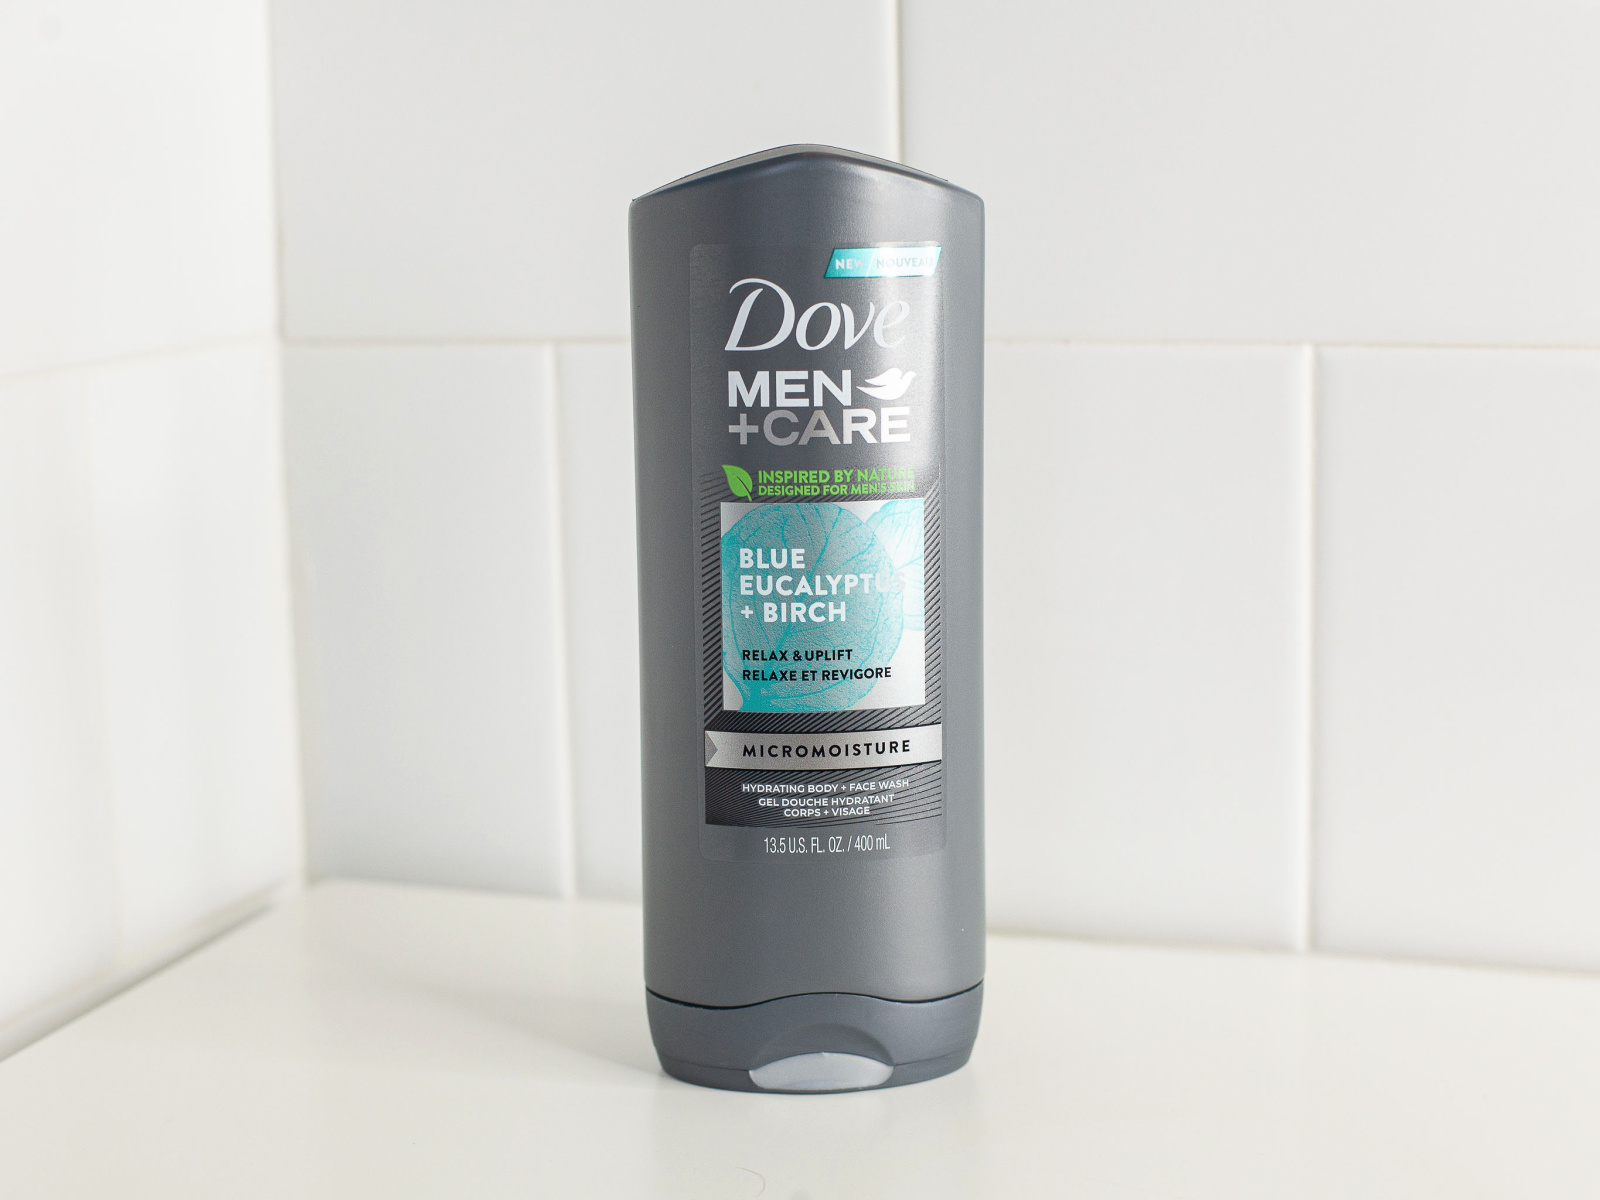 Dove Men+Care Body Wash Just $2.99 At Publix (Regular Price $6.99)